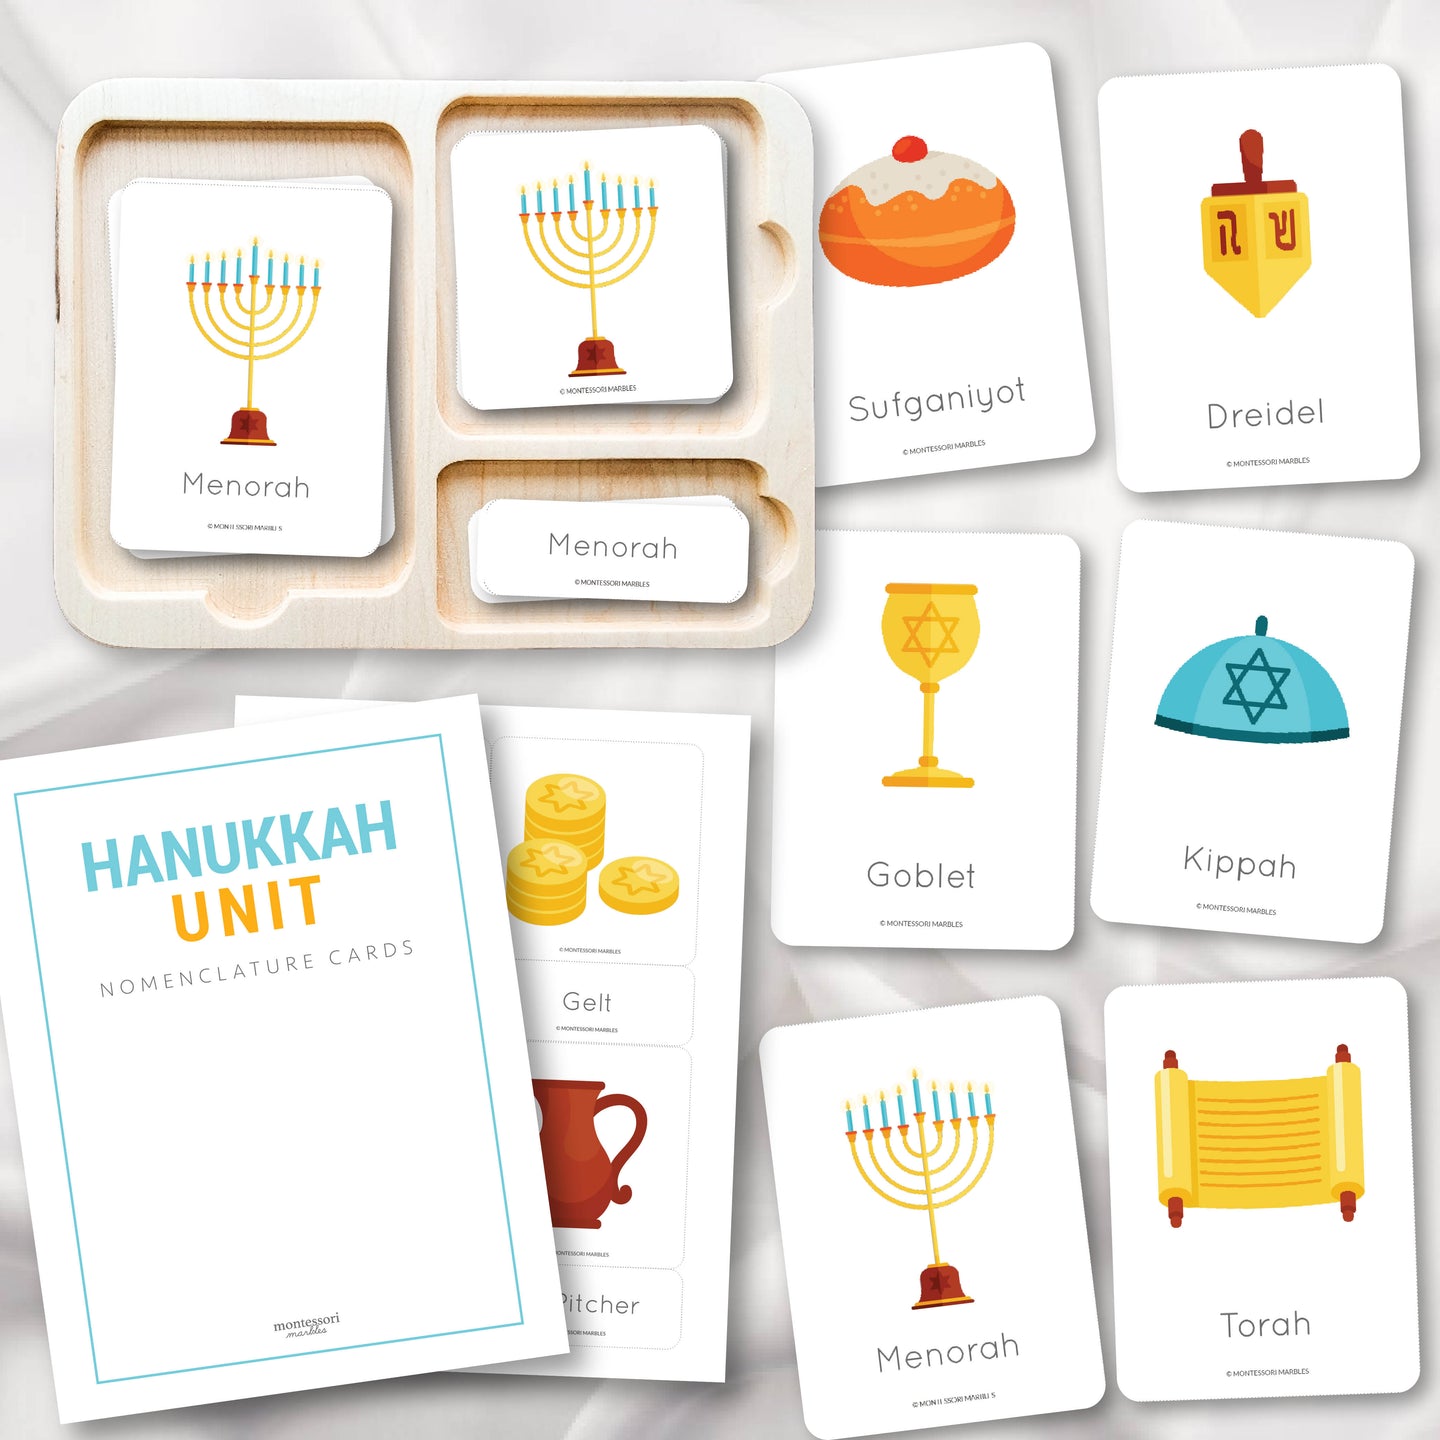 Hanukkah Nomenclature Cards